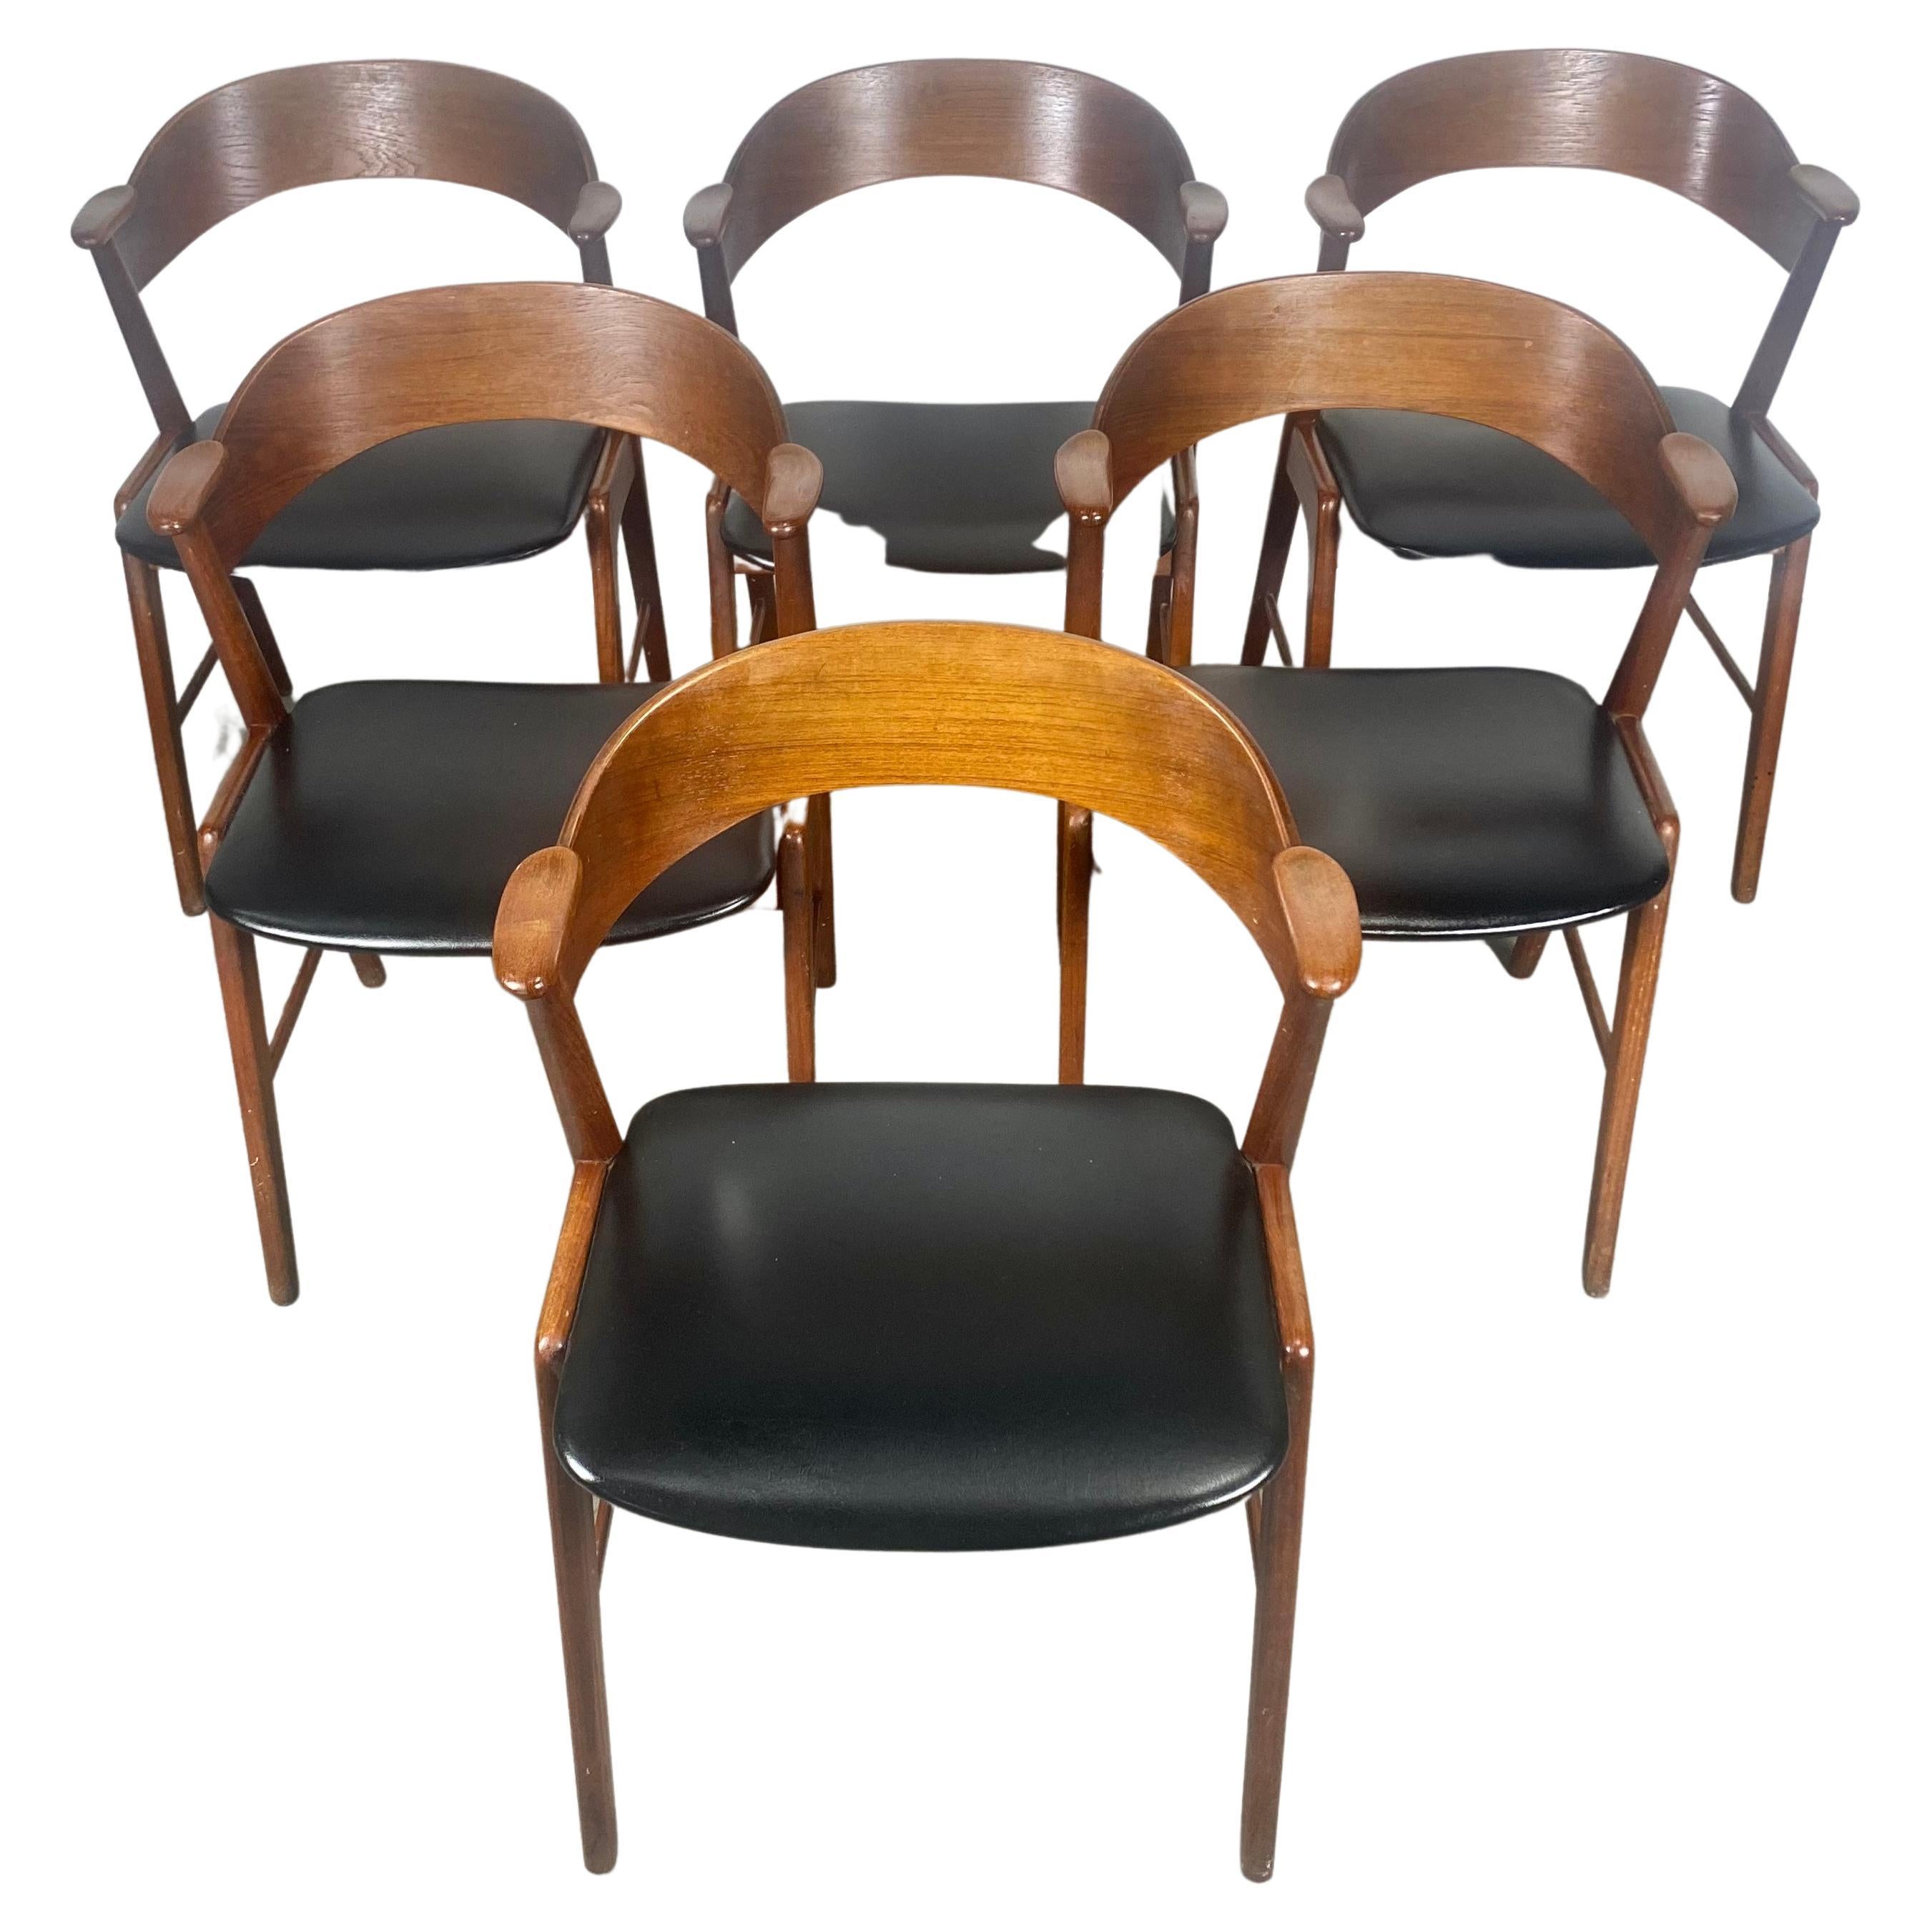 Set 6 Sculptural Teak Dining Chairs by Kai Kristiansen for K.S.Moblier / Denmark